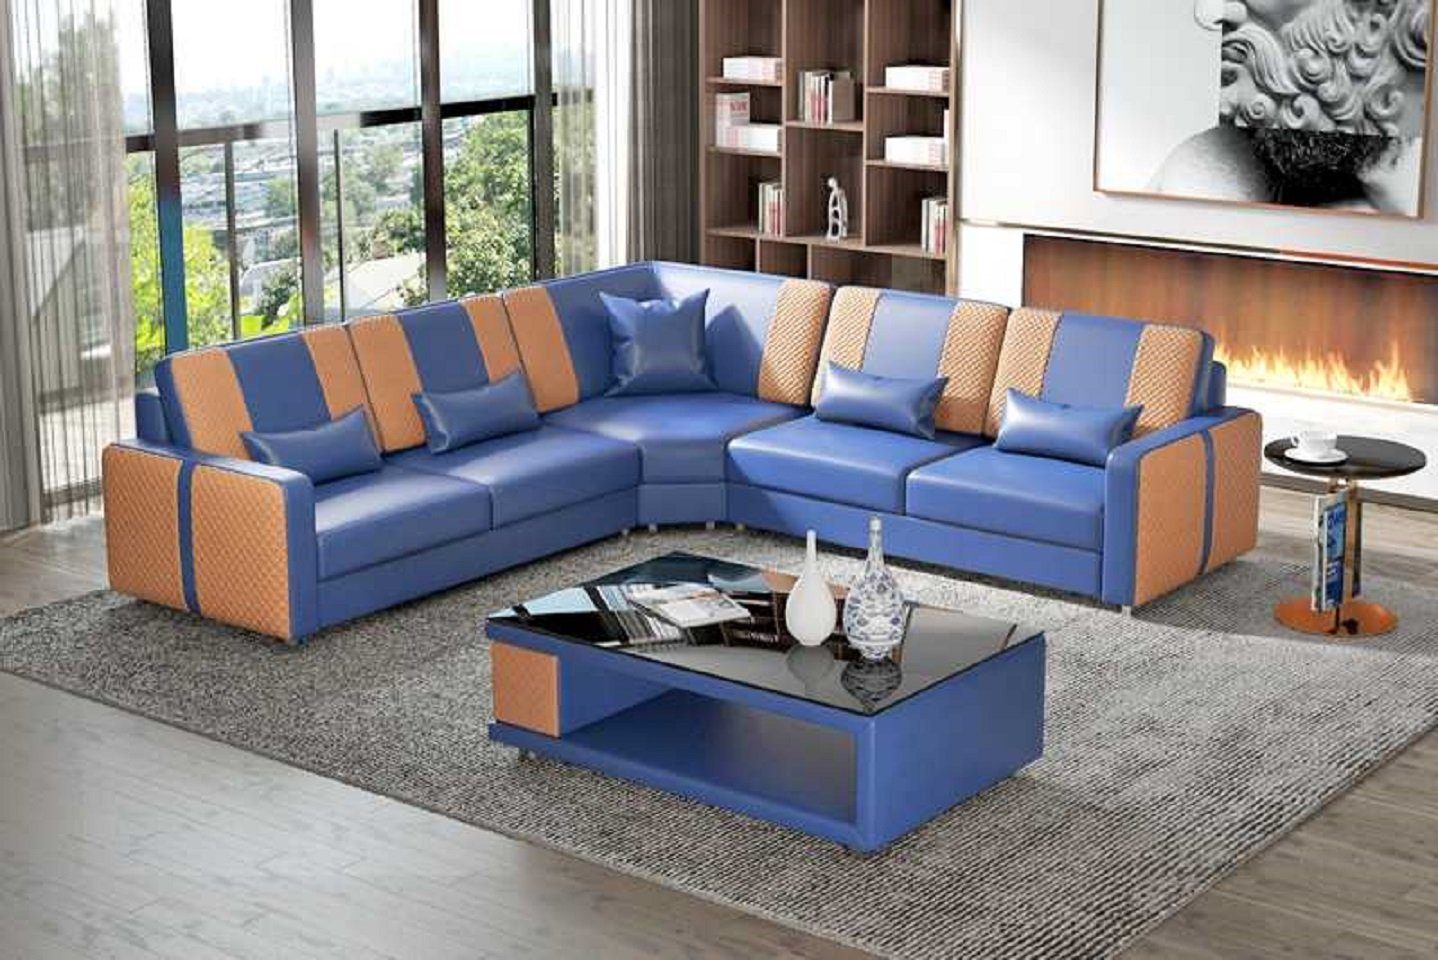 JVmoebel Ecksofa Design Eckgarnitur Ecksofa L Form Couch Sofa Modern Eckcouch, 3 Teile, Made in Europe Blau